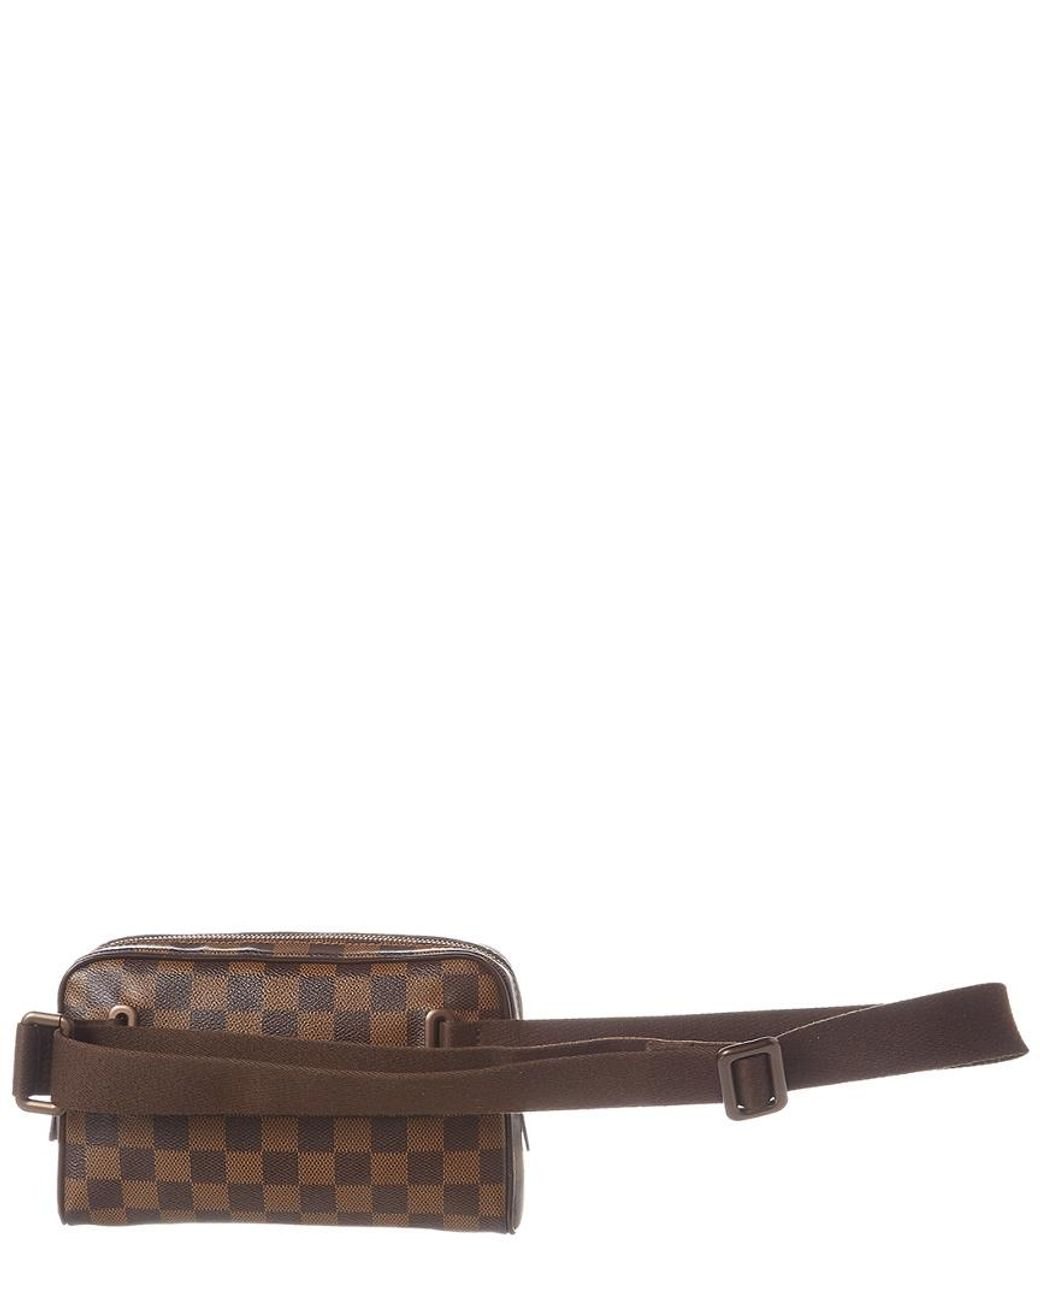 Louis Vuitton Damier Ebene Canvas Brooklyn Bum Bag in Brown | Lyst